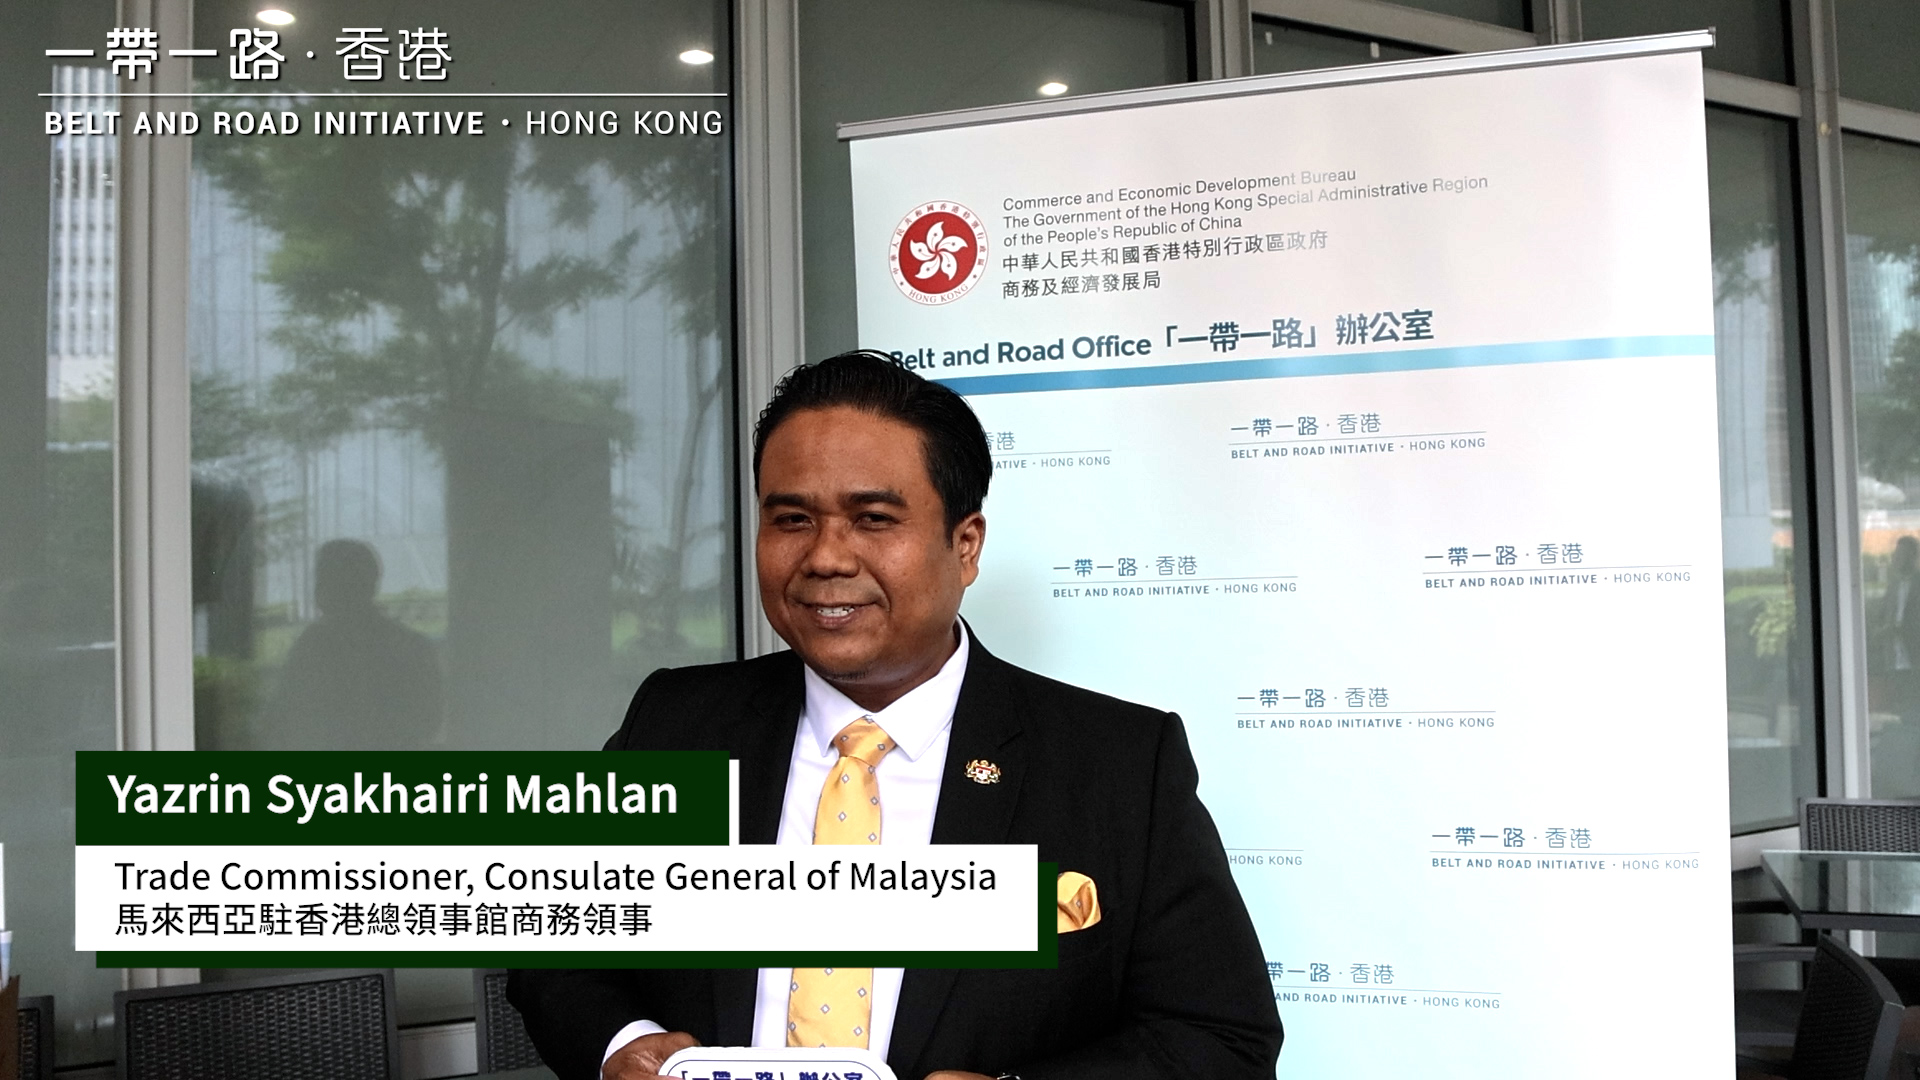 Interview with Mr Yazrin Syakhairi Mahlan